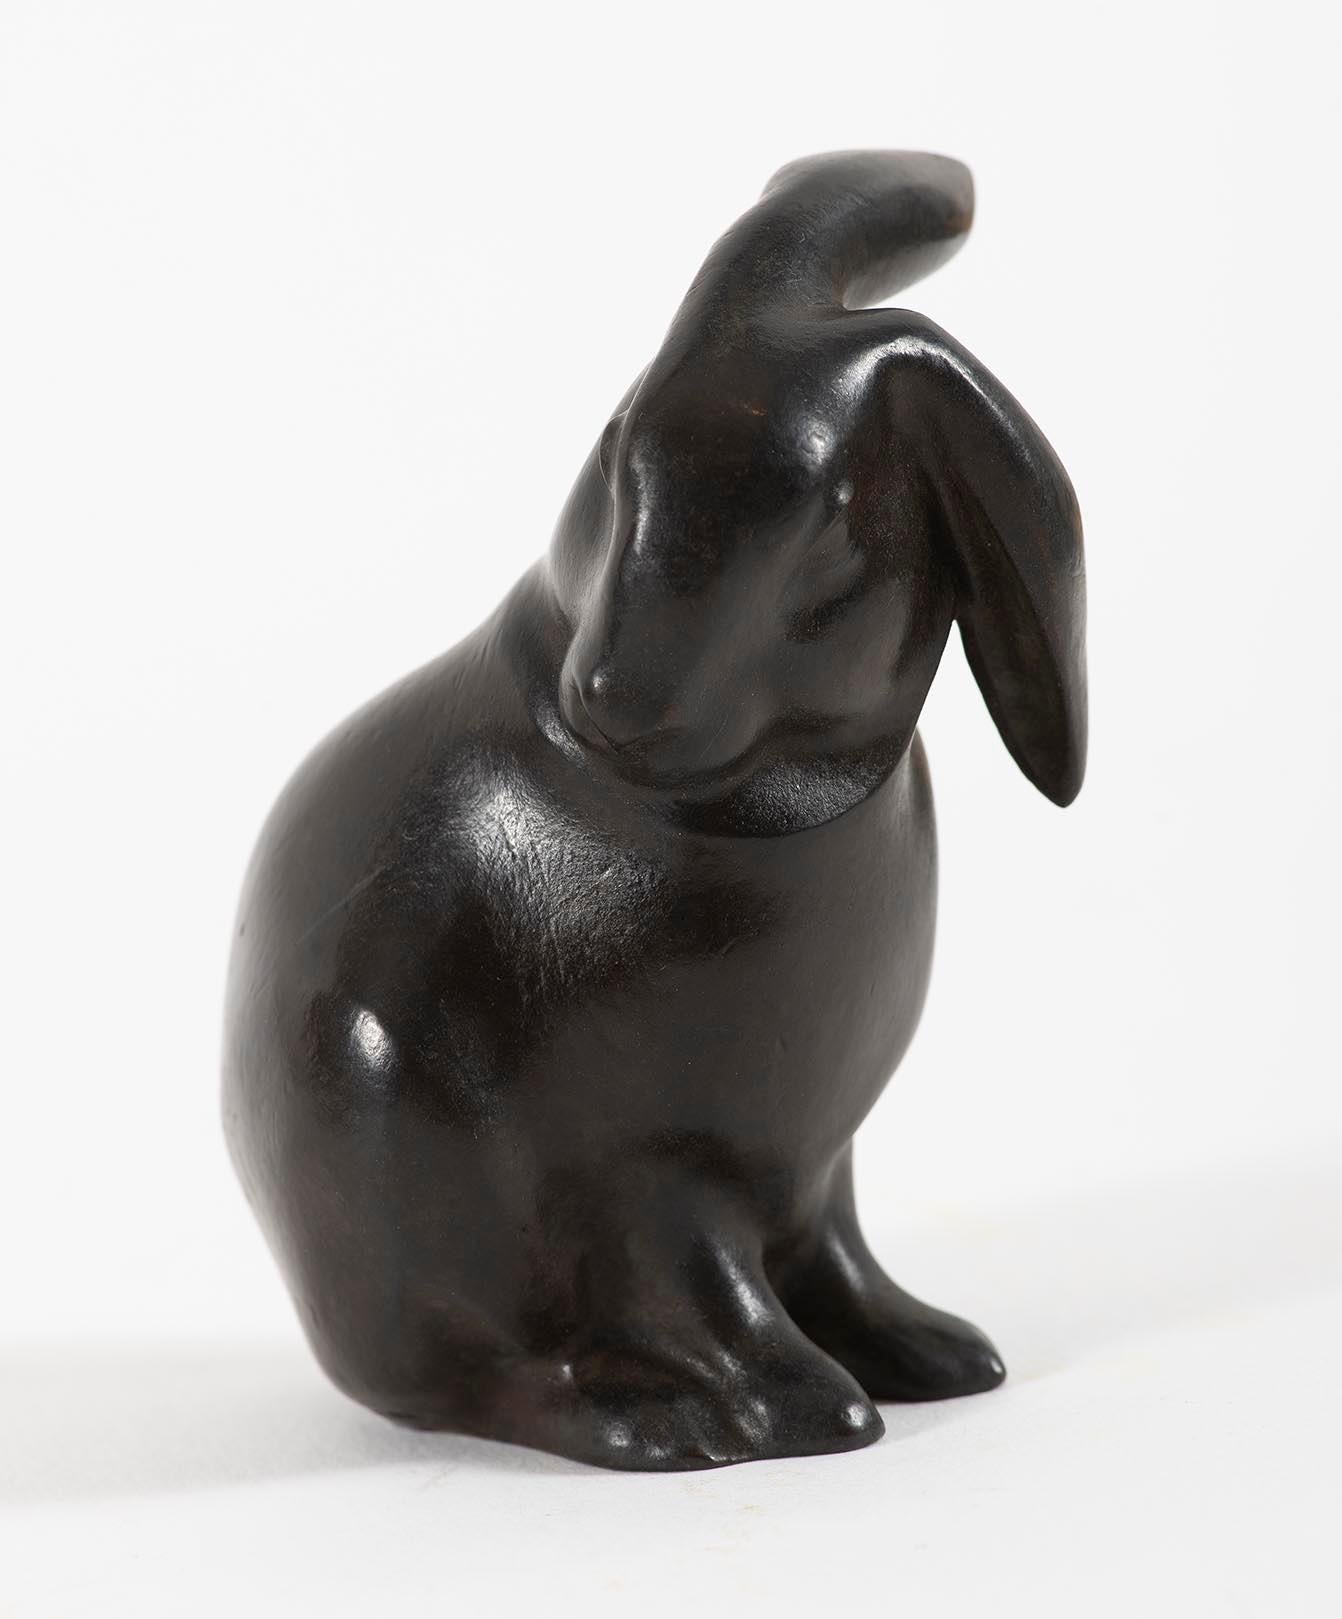 Edouard-Marcel Sandoz Figurative Sculpture - Lapin assis, tête tournée, Sandoz, 1910's, bronze, animal, rabbits, rare proof